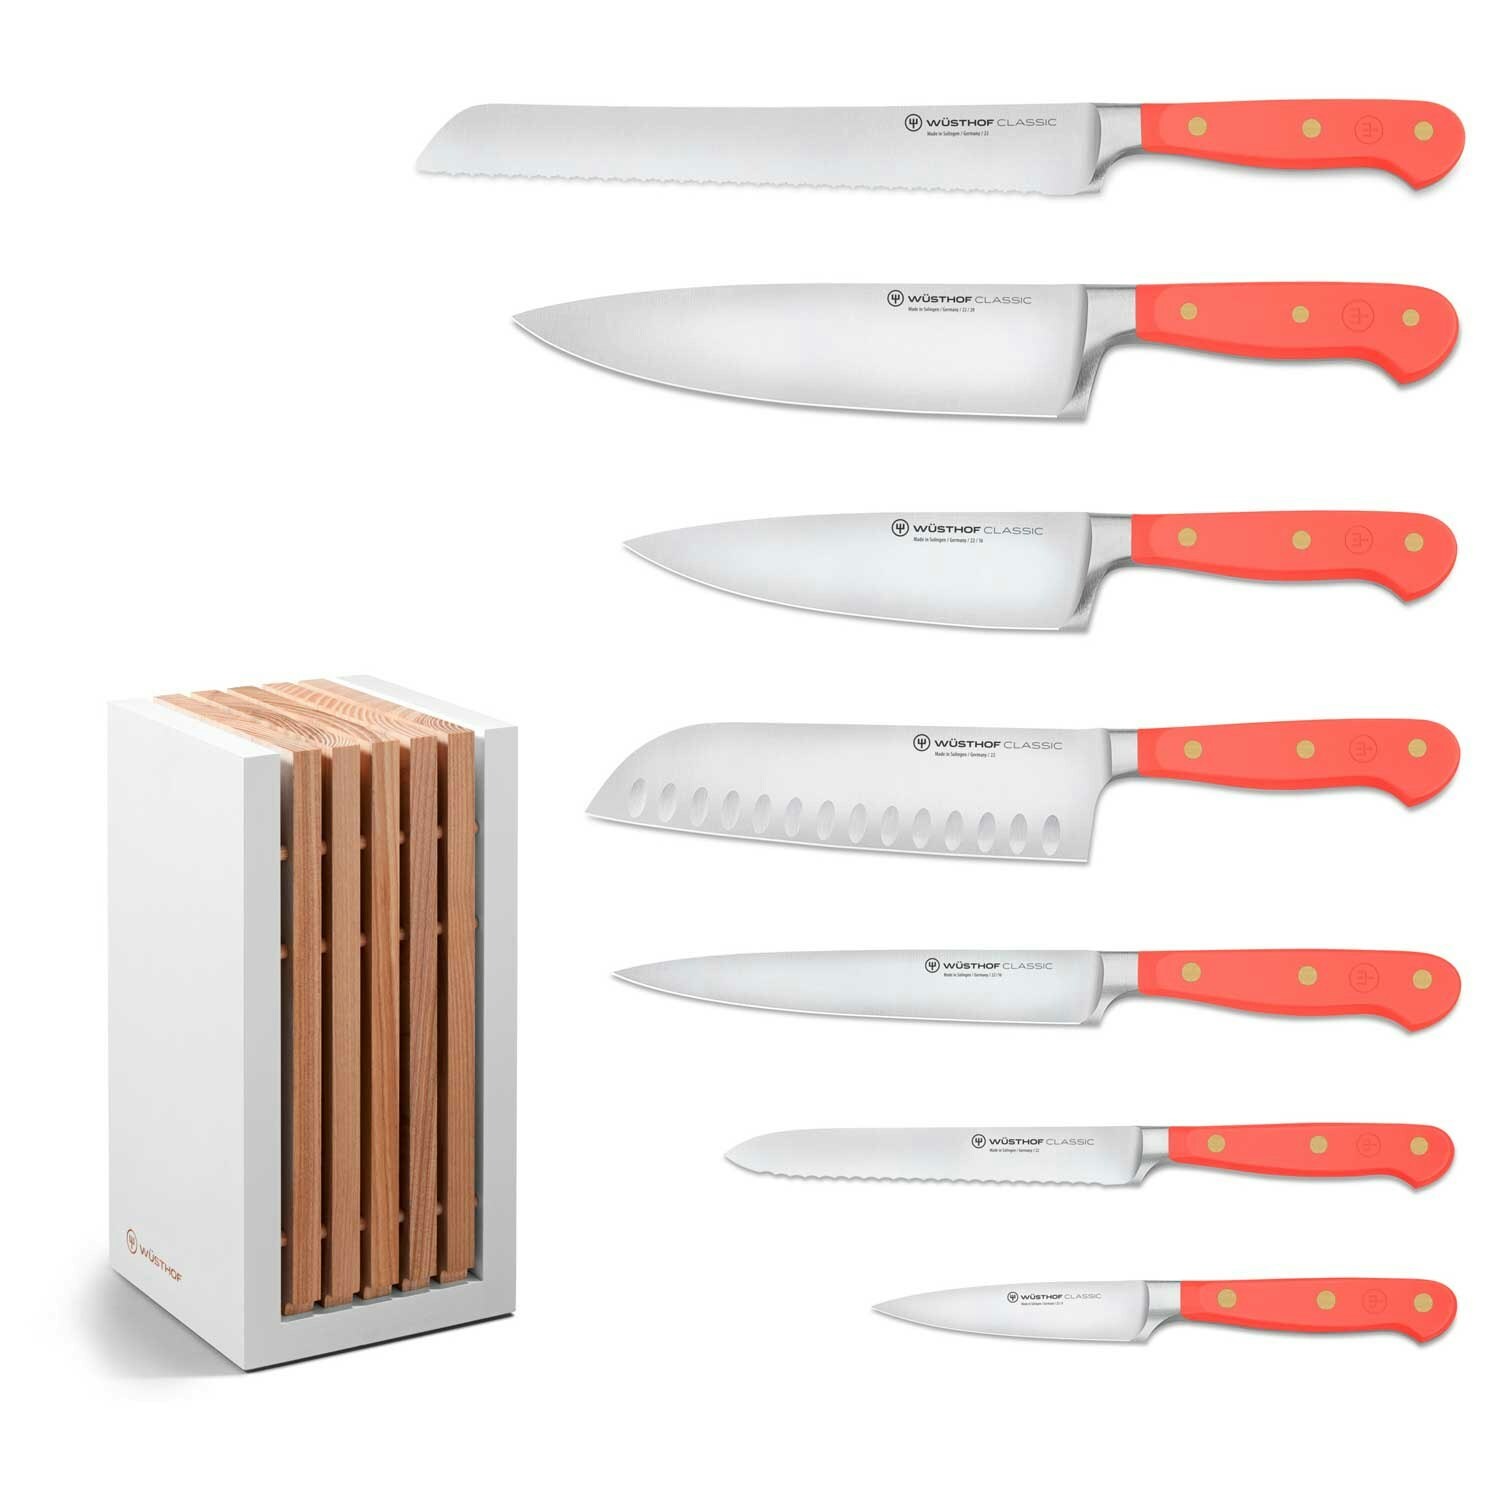 https://royaldesign.com/image/2/wusthof-classic-colour-knife-set-with-knife-block-8-pieces-6